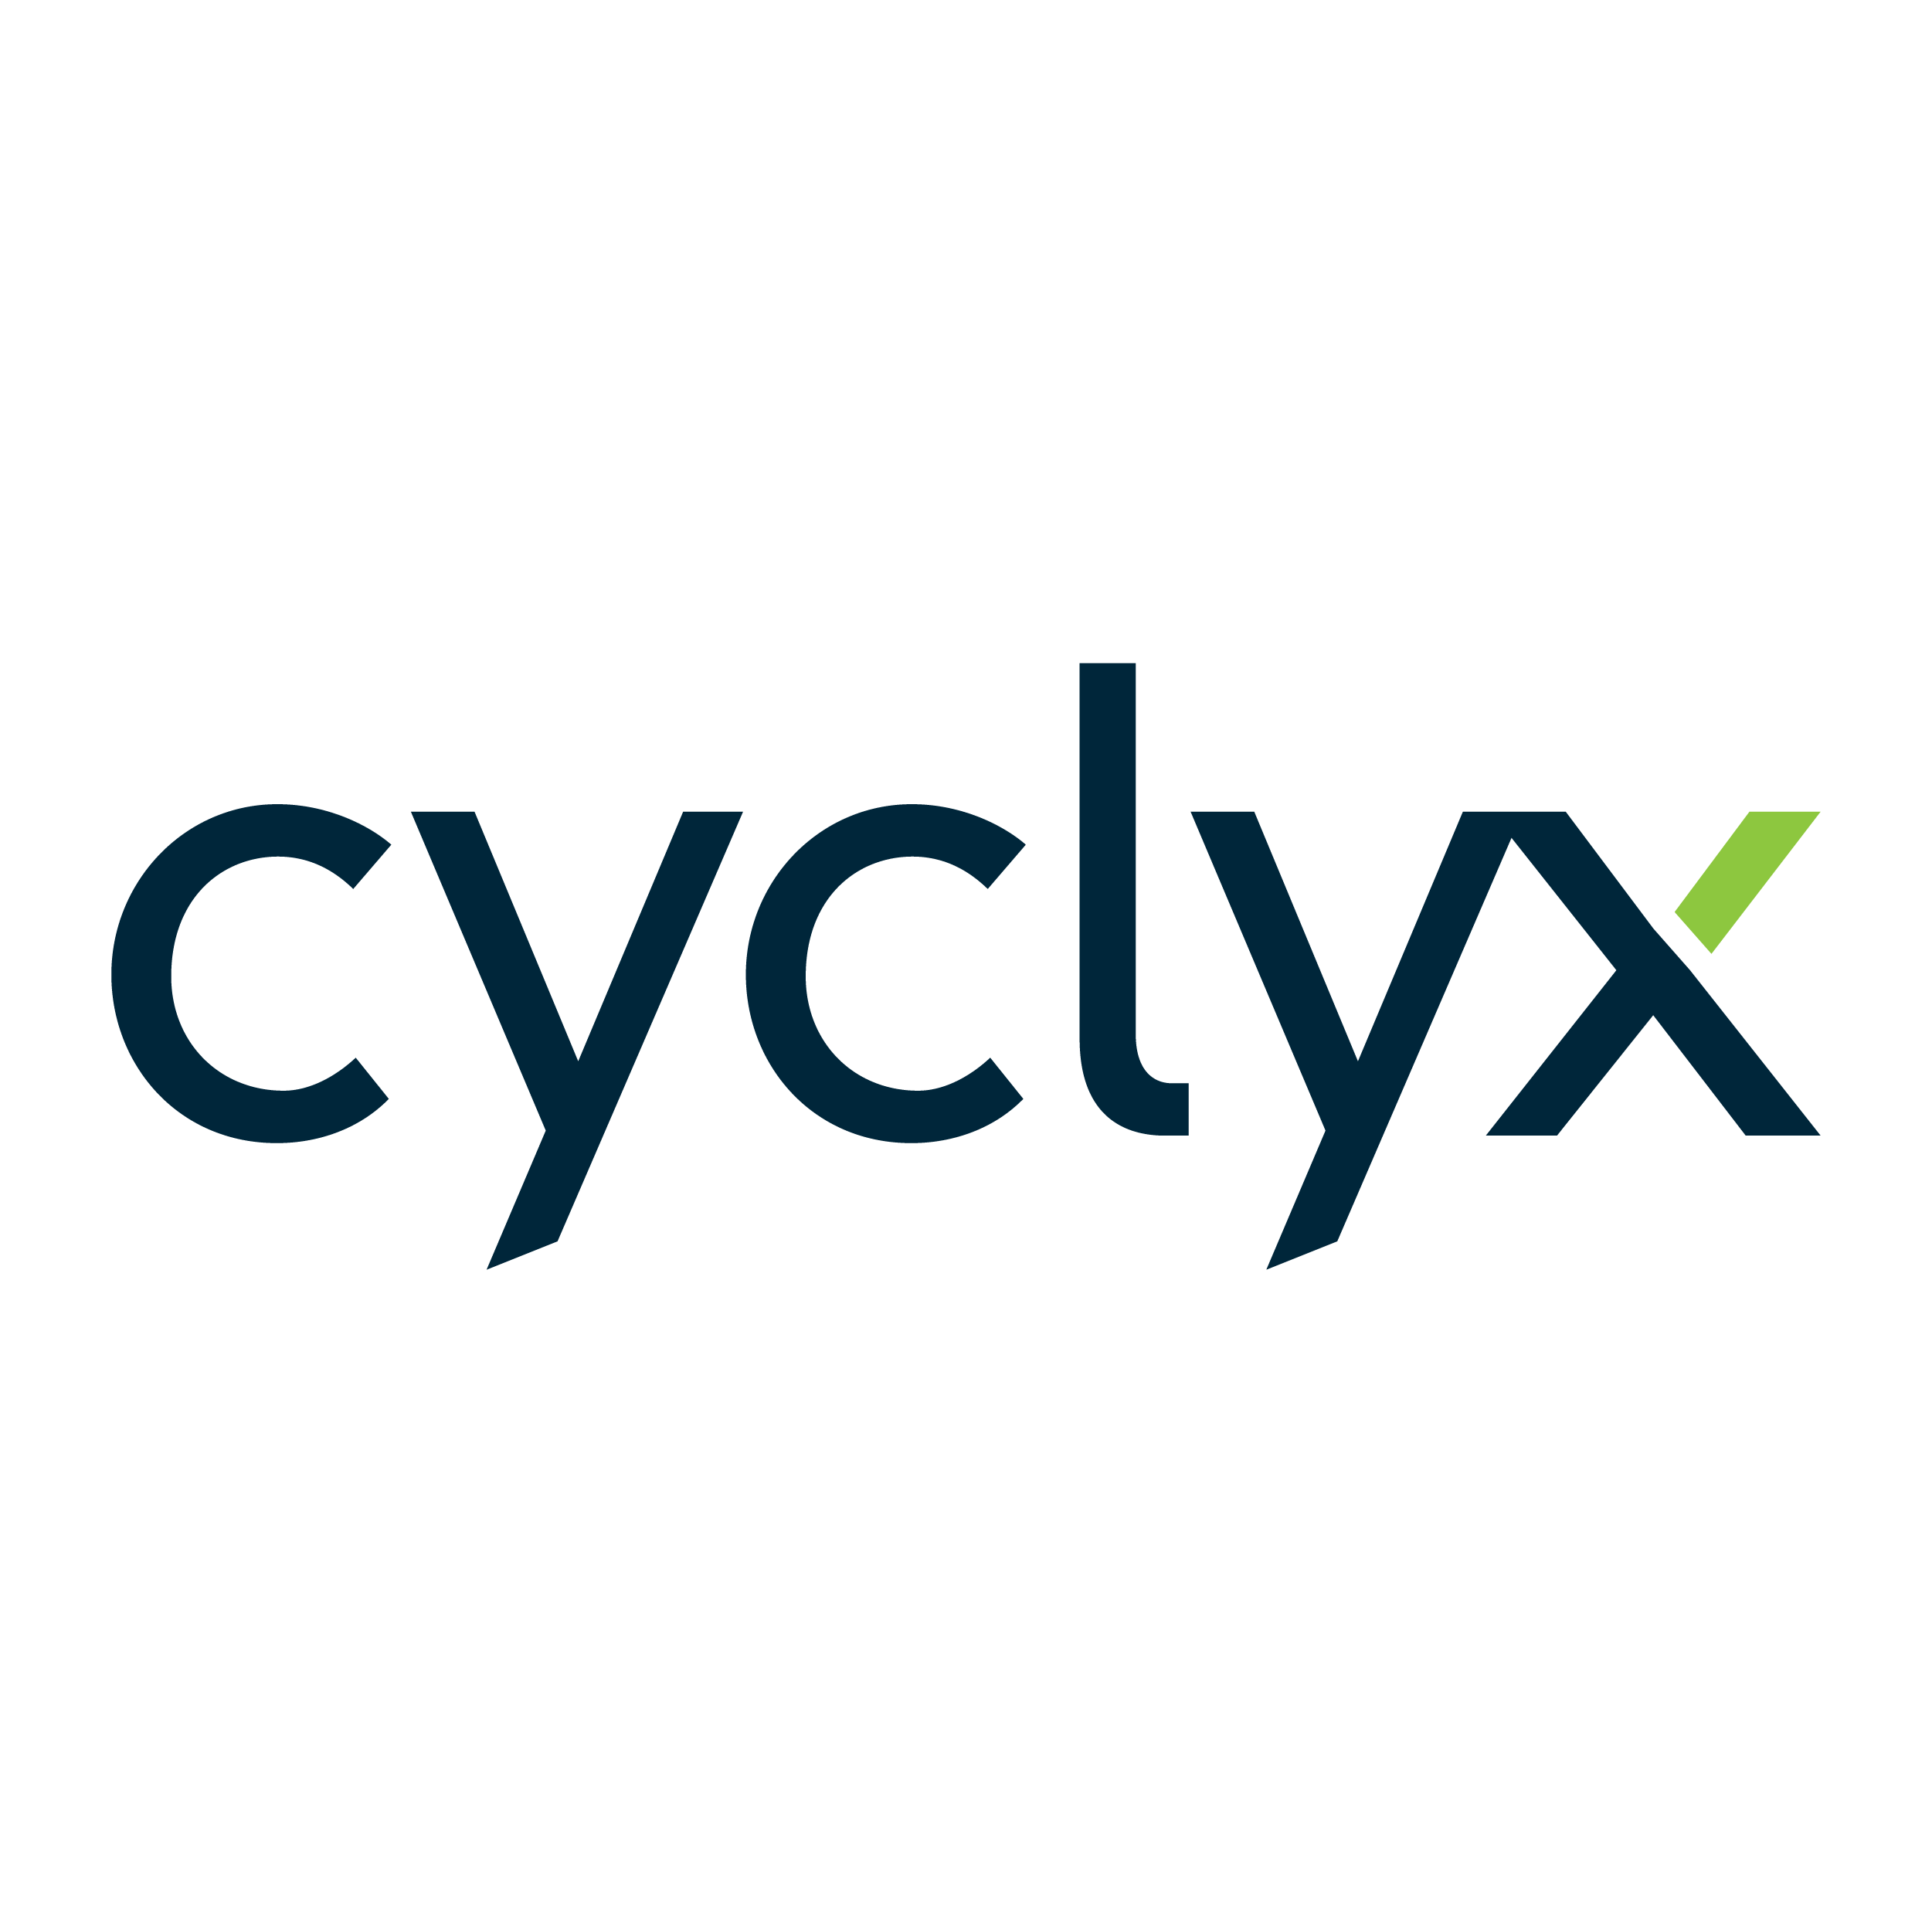 Cyclyx logo